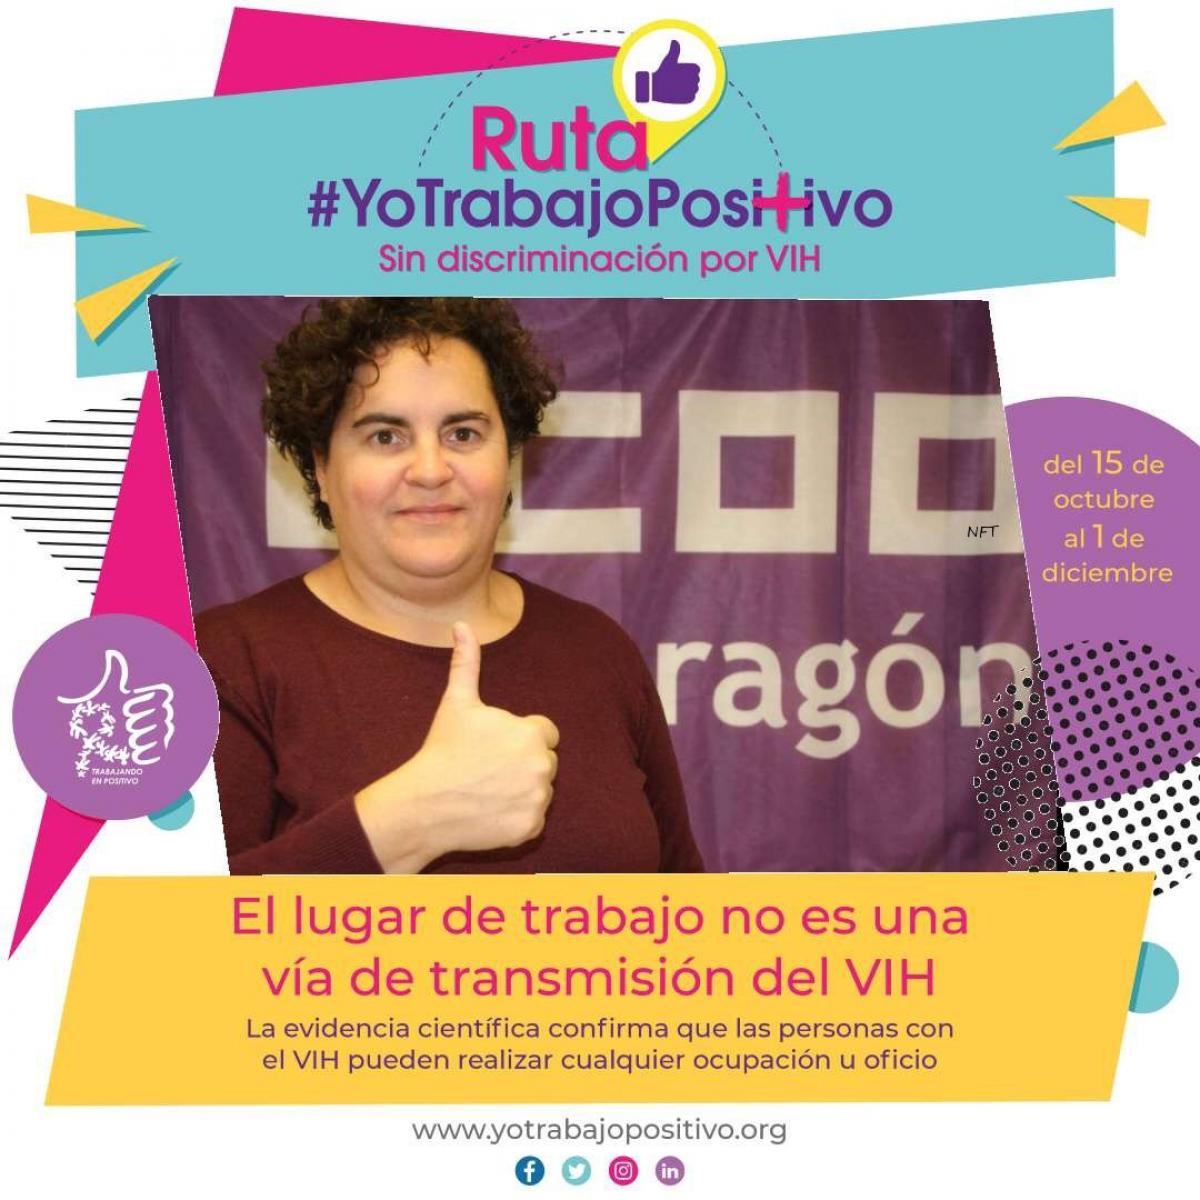 CCOO Aragn se suma a #YoTrabajoPositivo